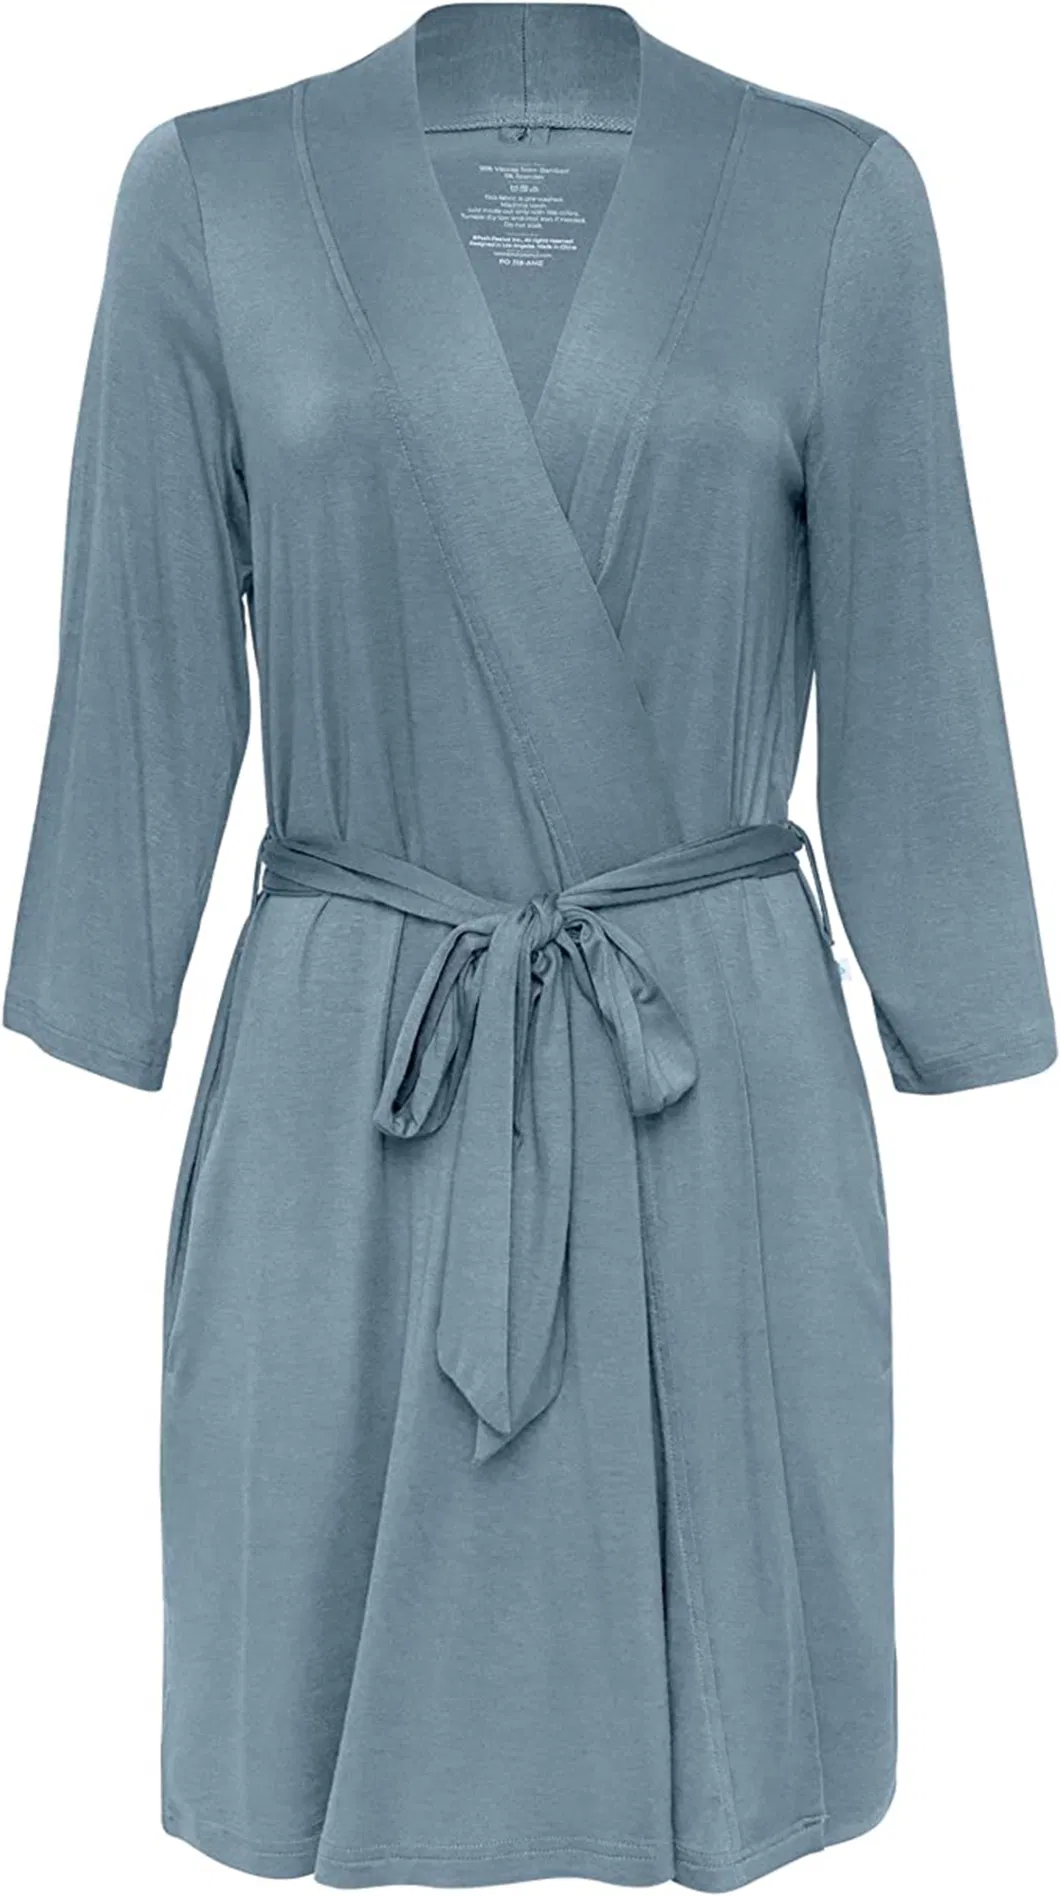 Sustainable Women Kimono Robes Short Lightweight Robe Soft Knit Sleepwear Casual Knit Bathrobe Ladies Loungewear Supplier